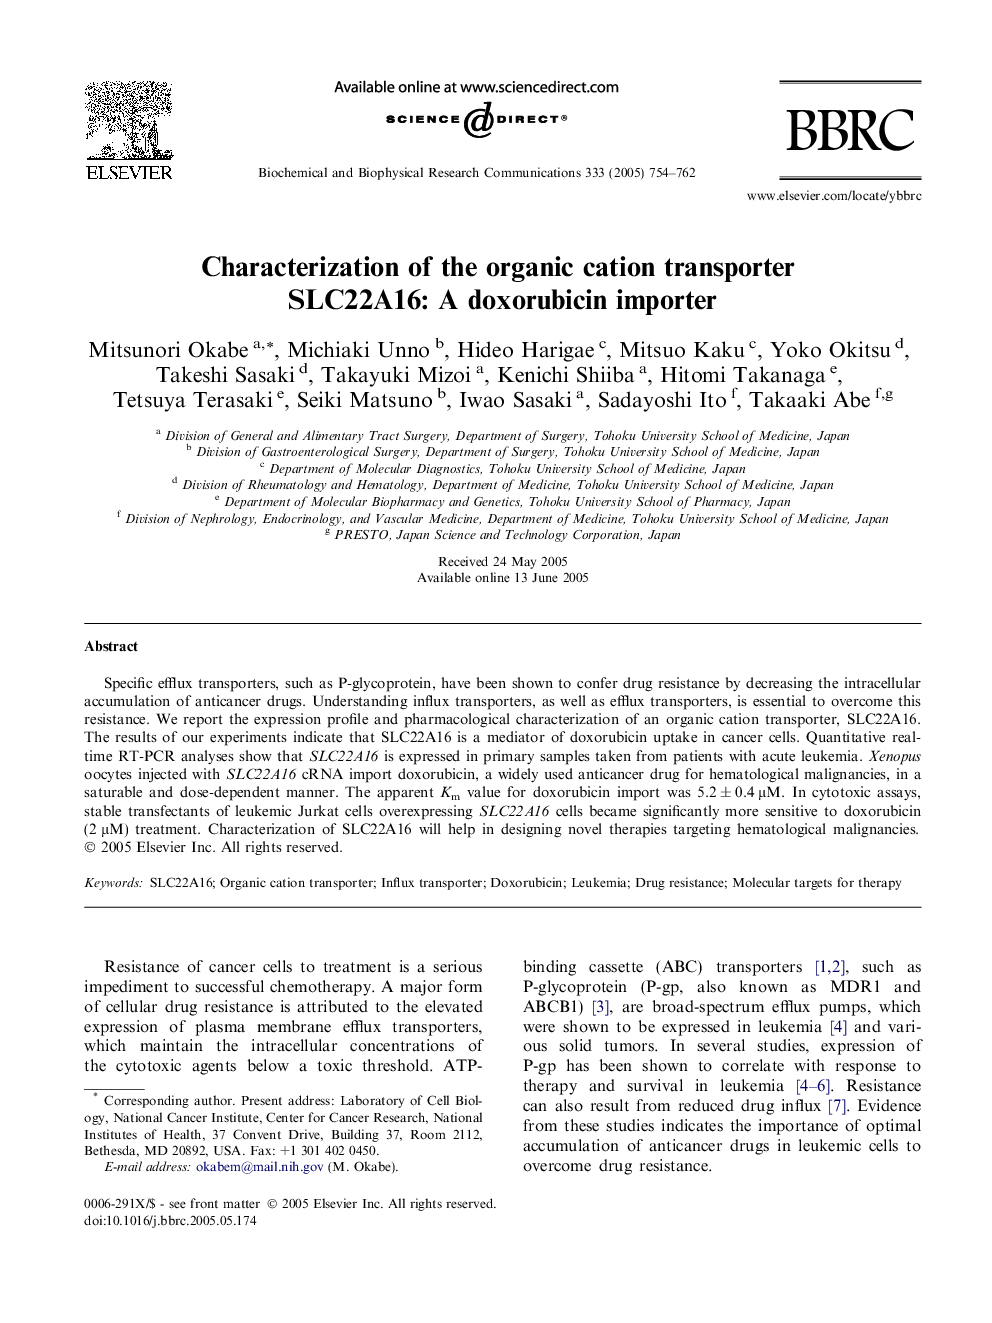 Characterization of the organic cation transporter SLC22A16: A doxorubicin importer